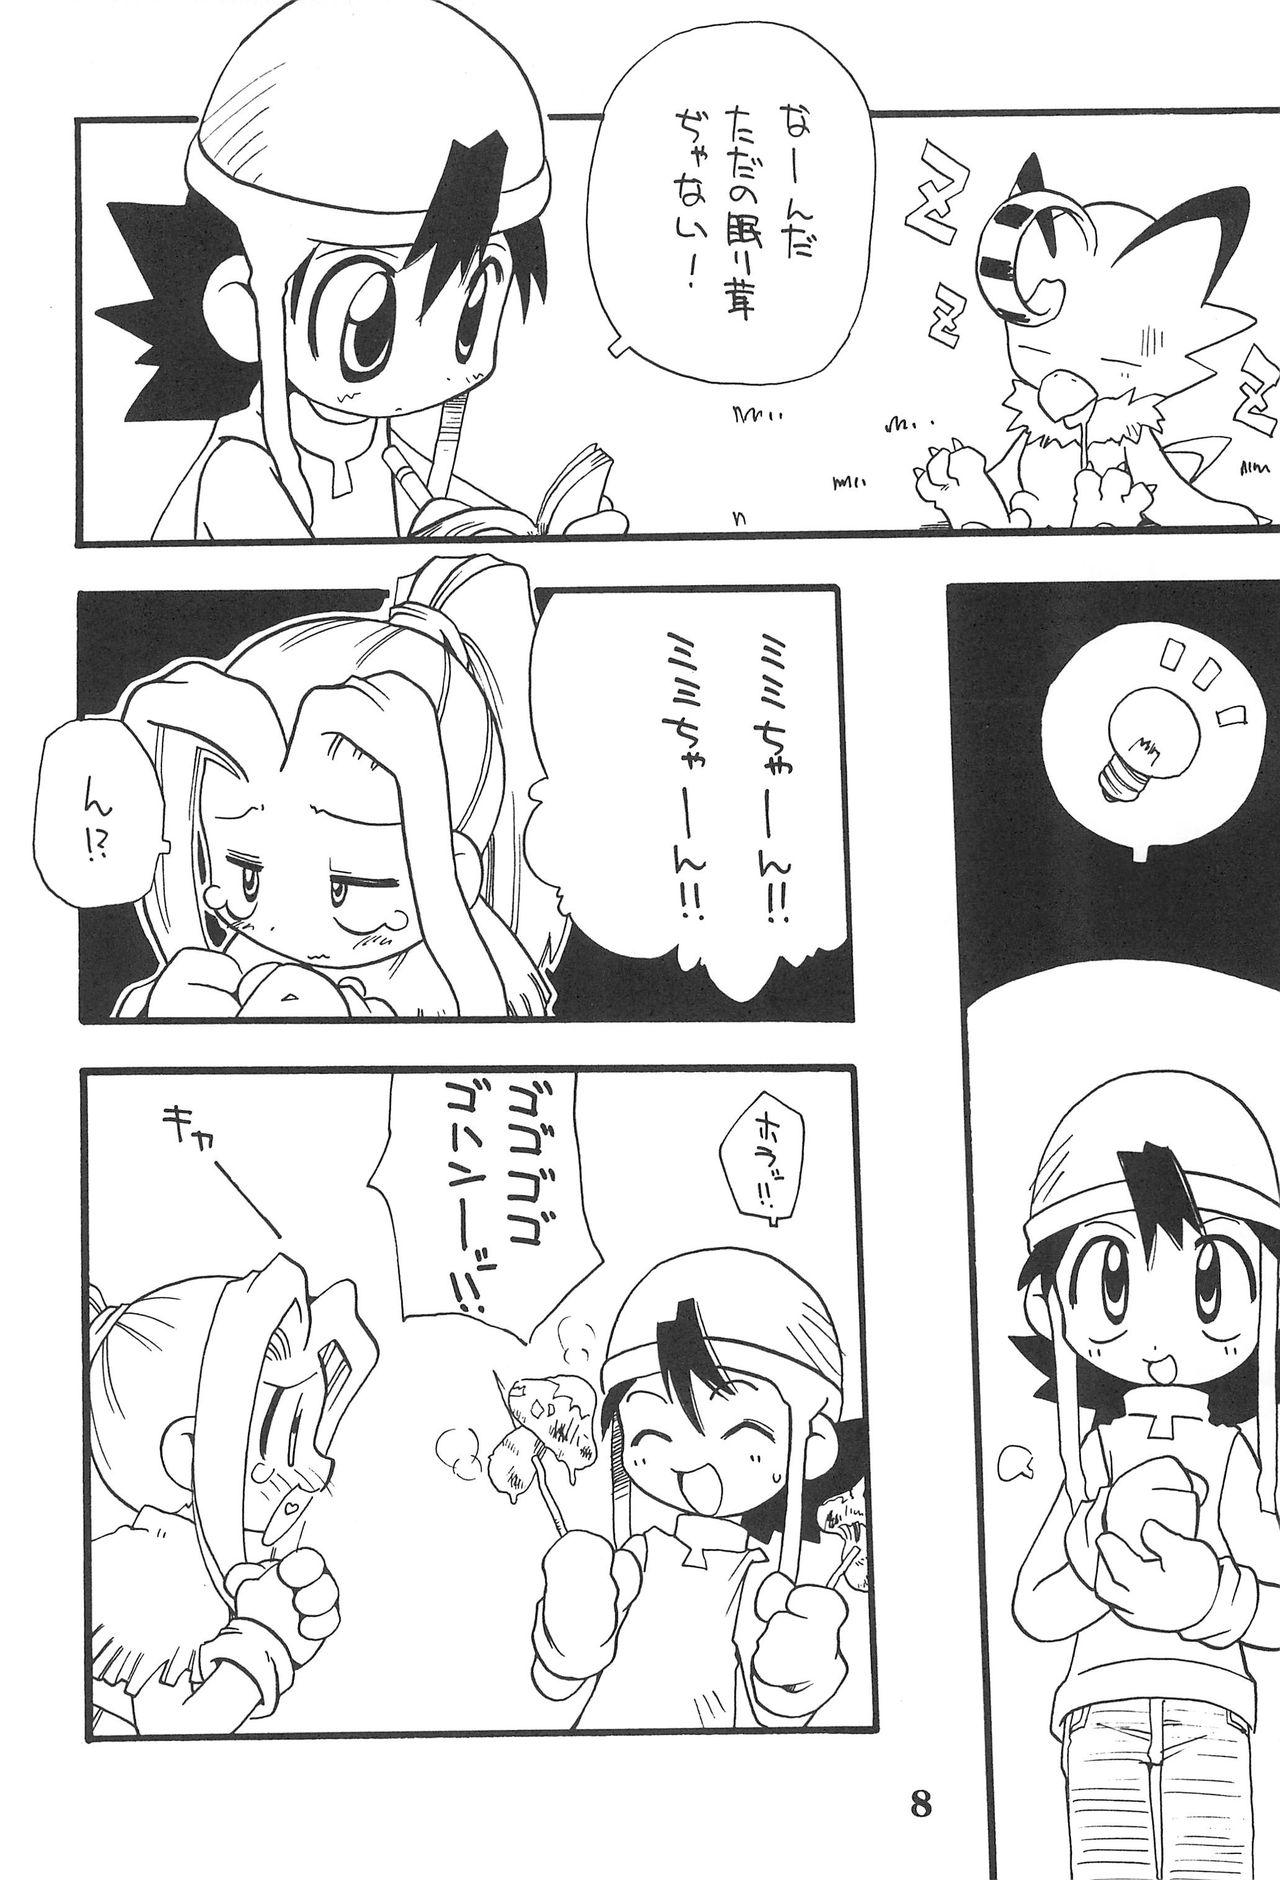 Nasty Free Porn K8 KICHIKU BOOK8 COSTOM - Digimon adventure Realsex - Page 8